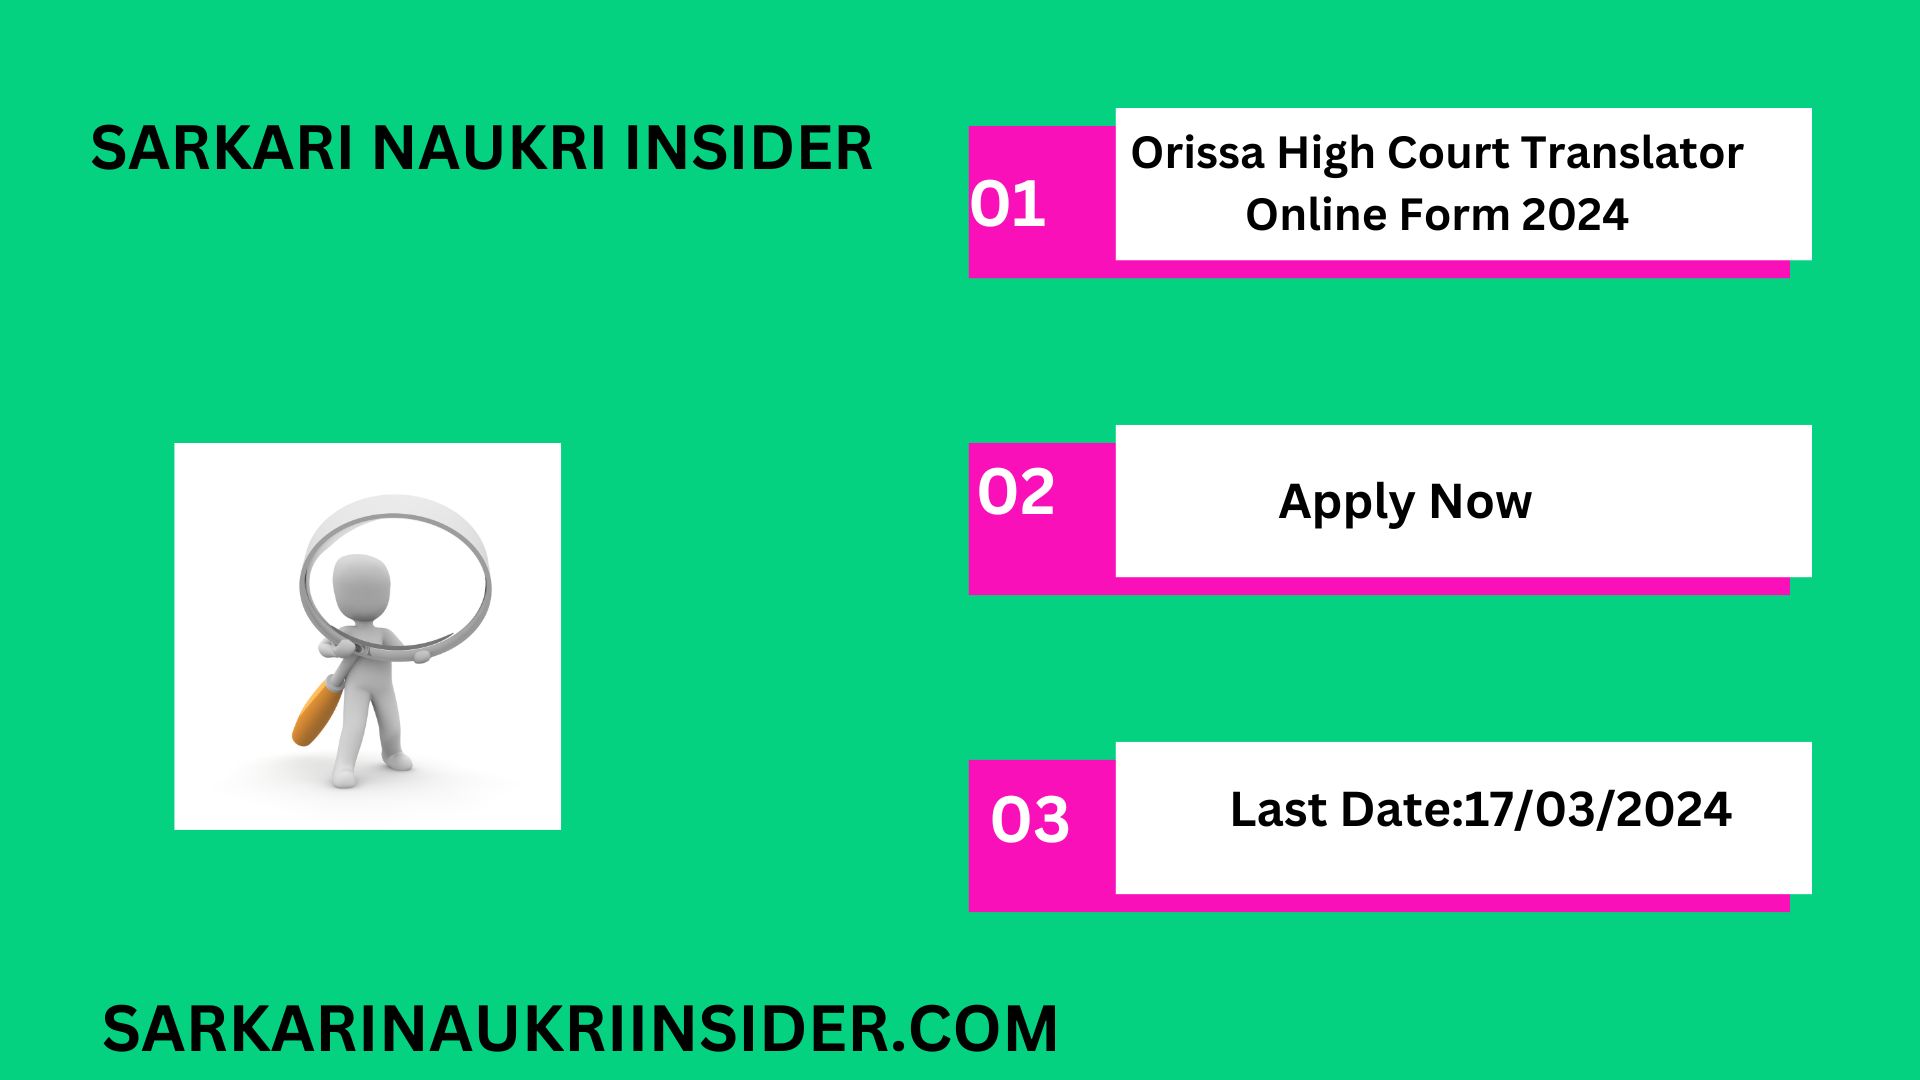 Orissa High Court Translator Online Form 2024